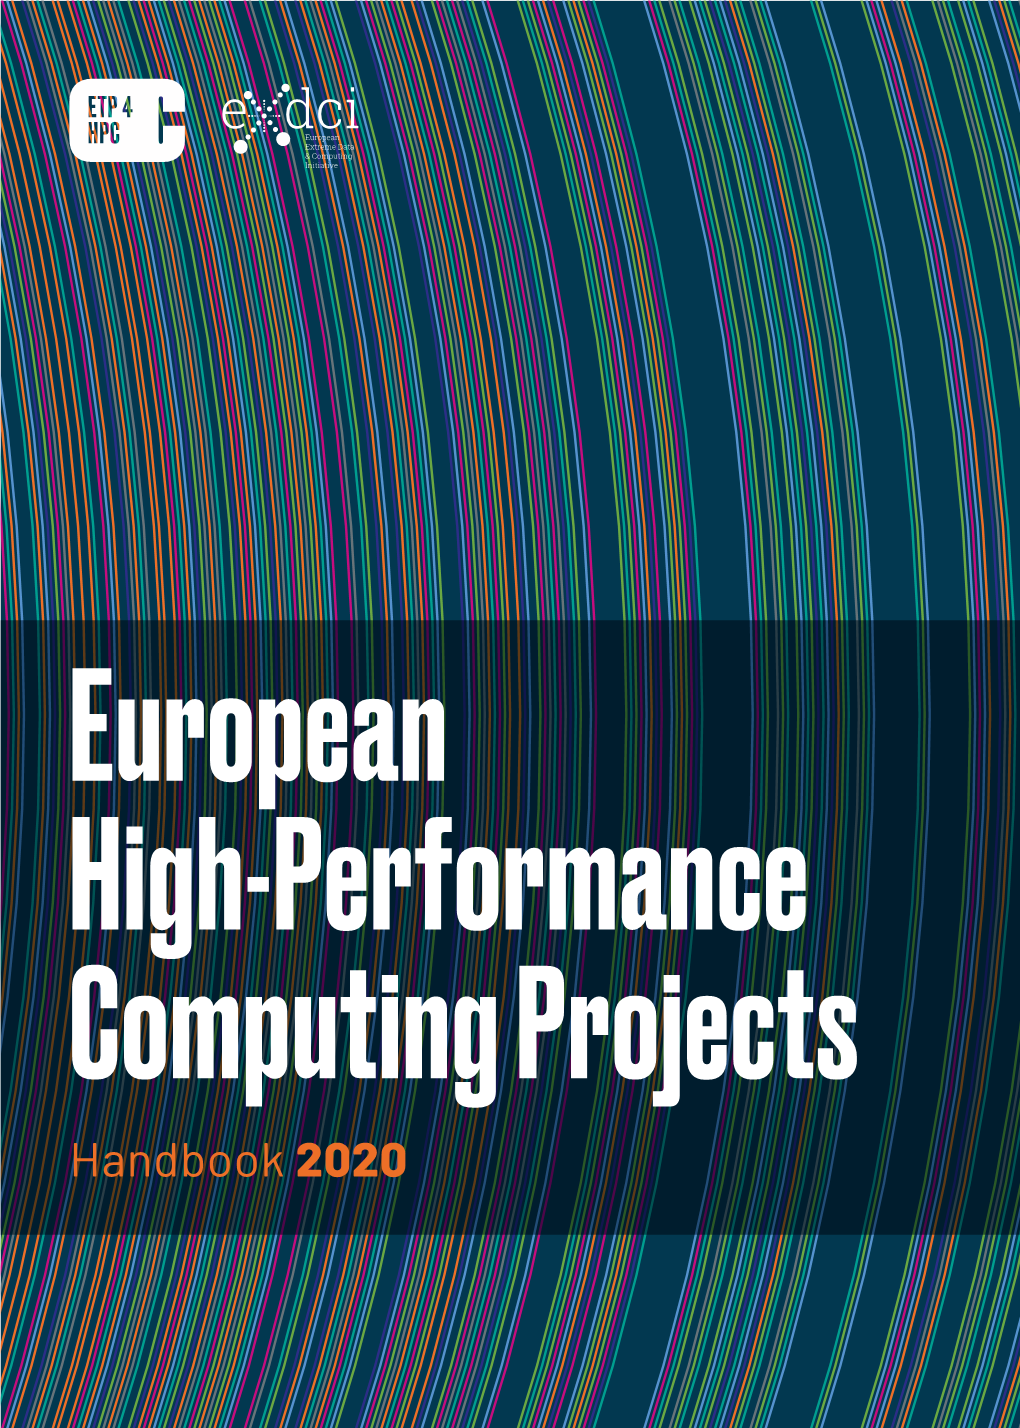 European High-Performance Computing Projects - HANDBOOK 2020 3